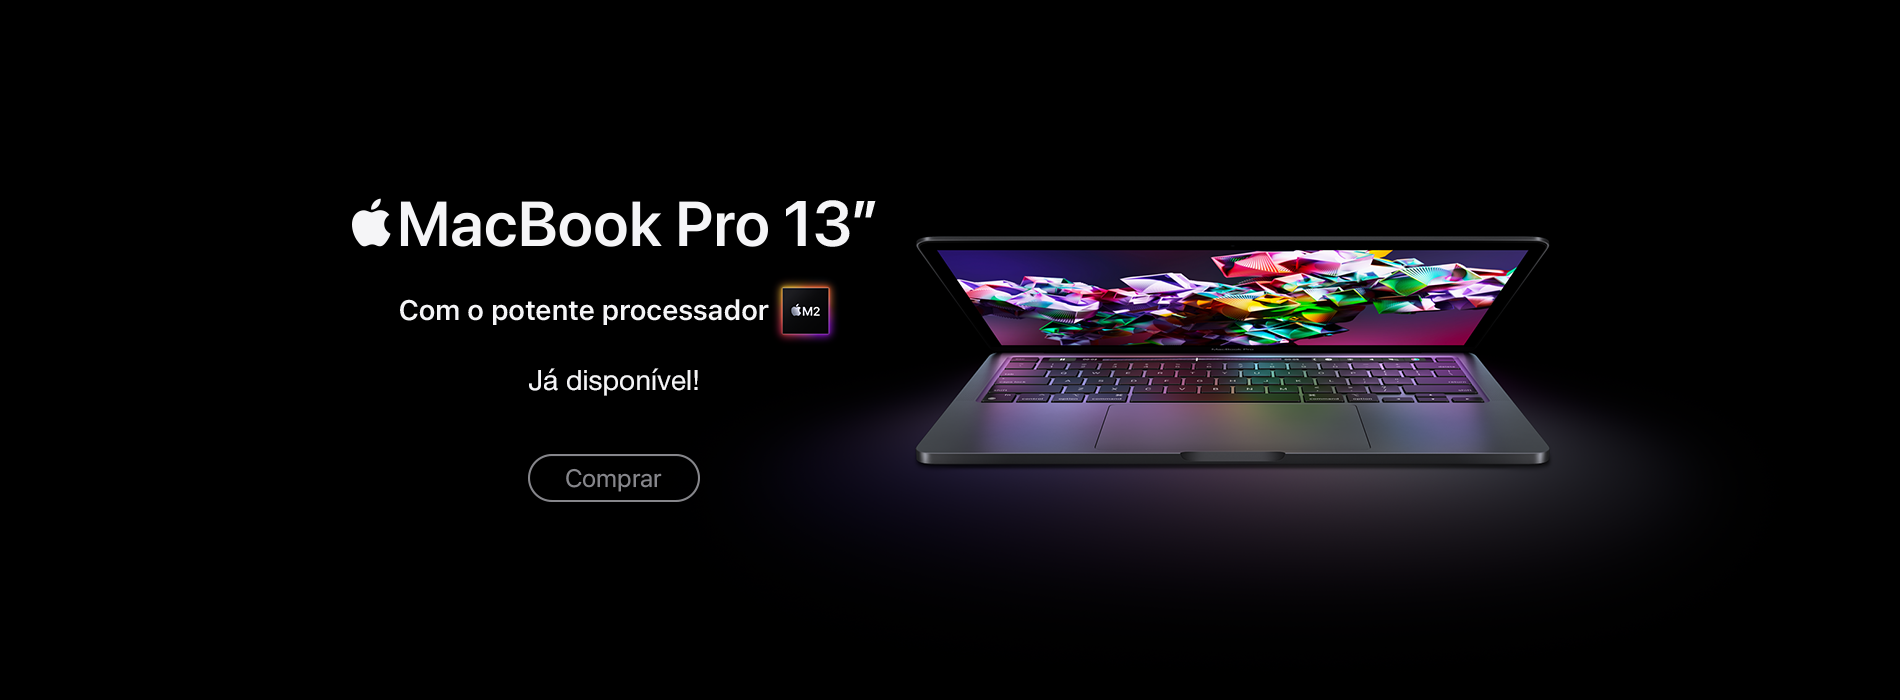 MacBook Pro 13 - Disponível